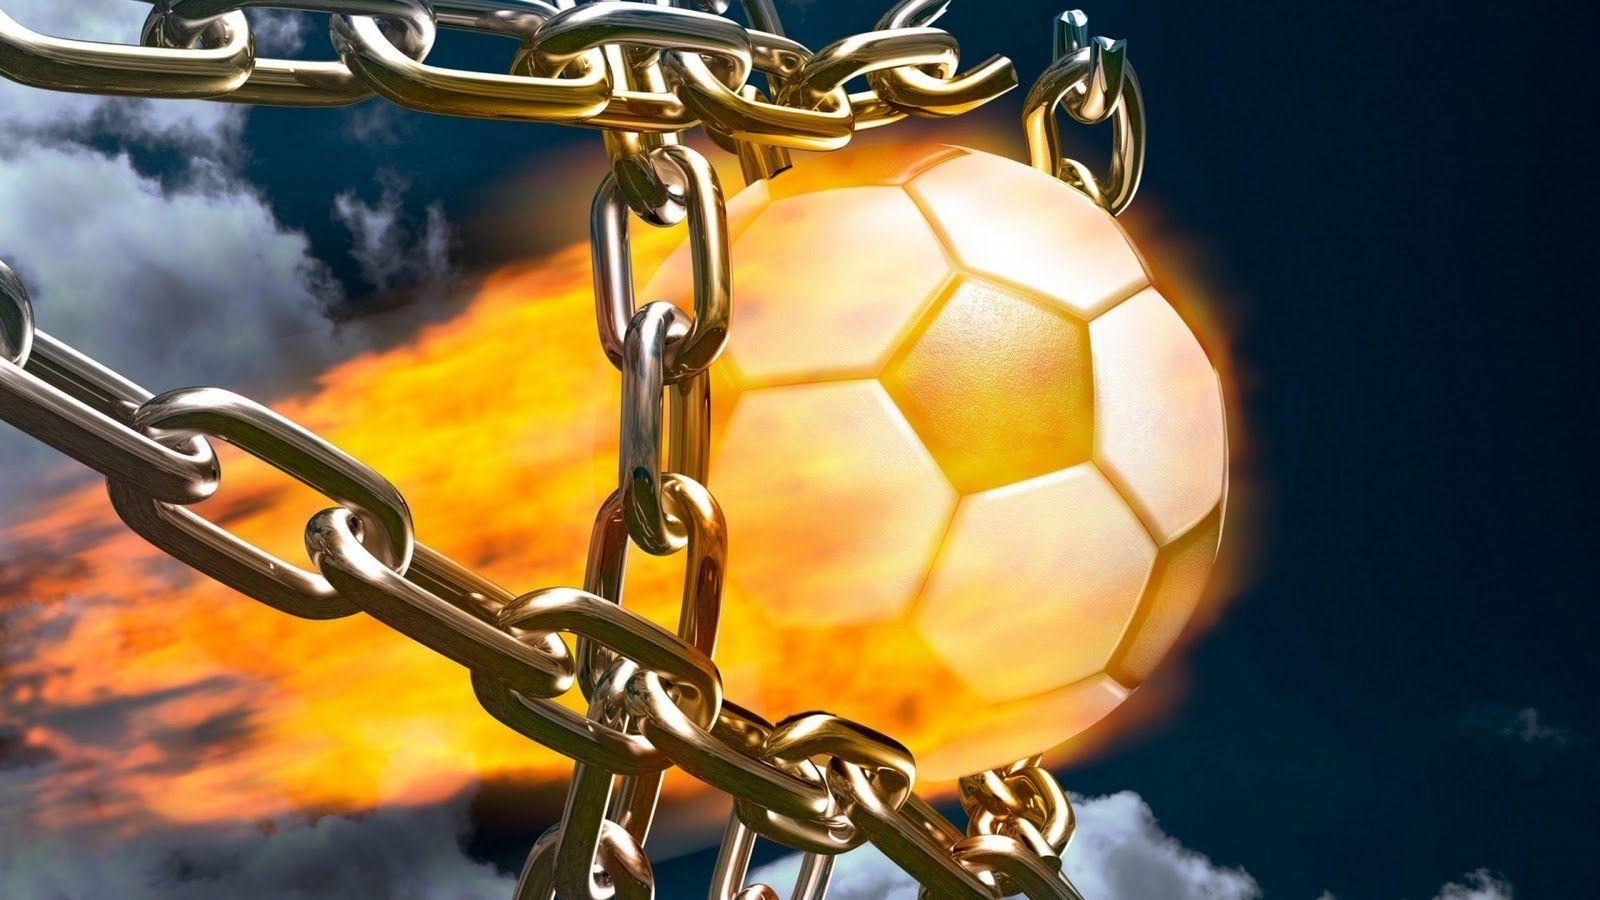 Cool Flaming Soccer Ball Wallpaper 9904